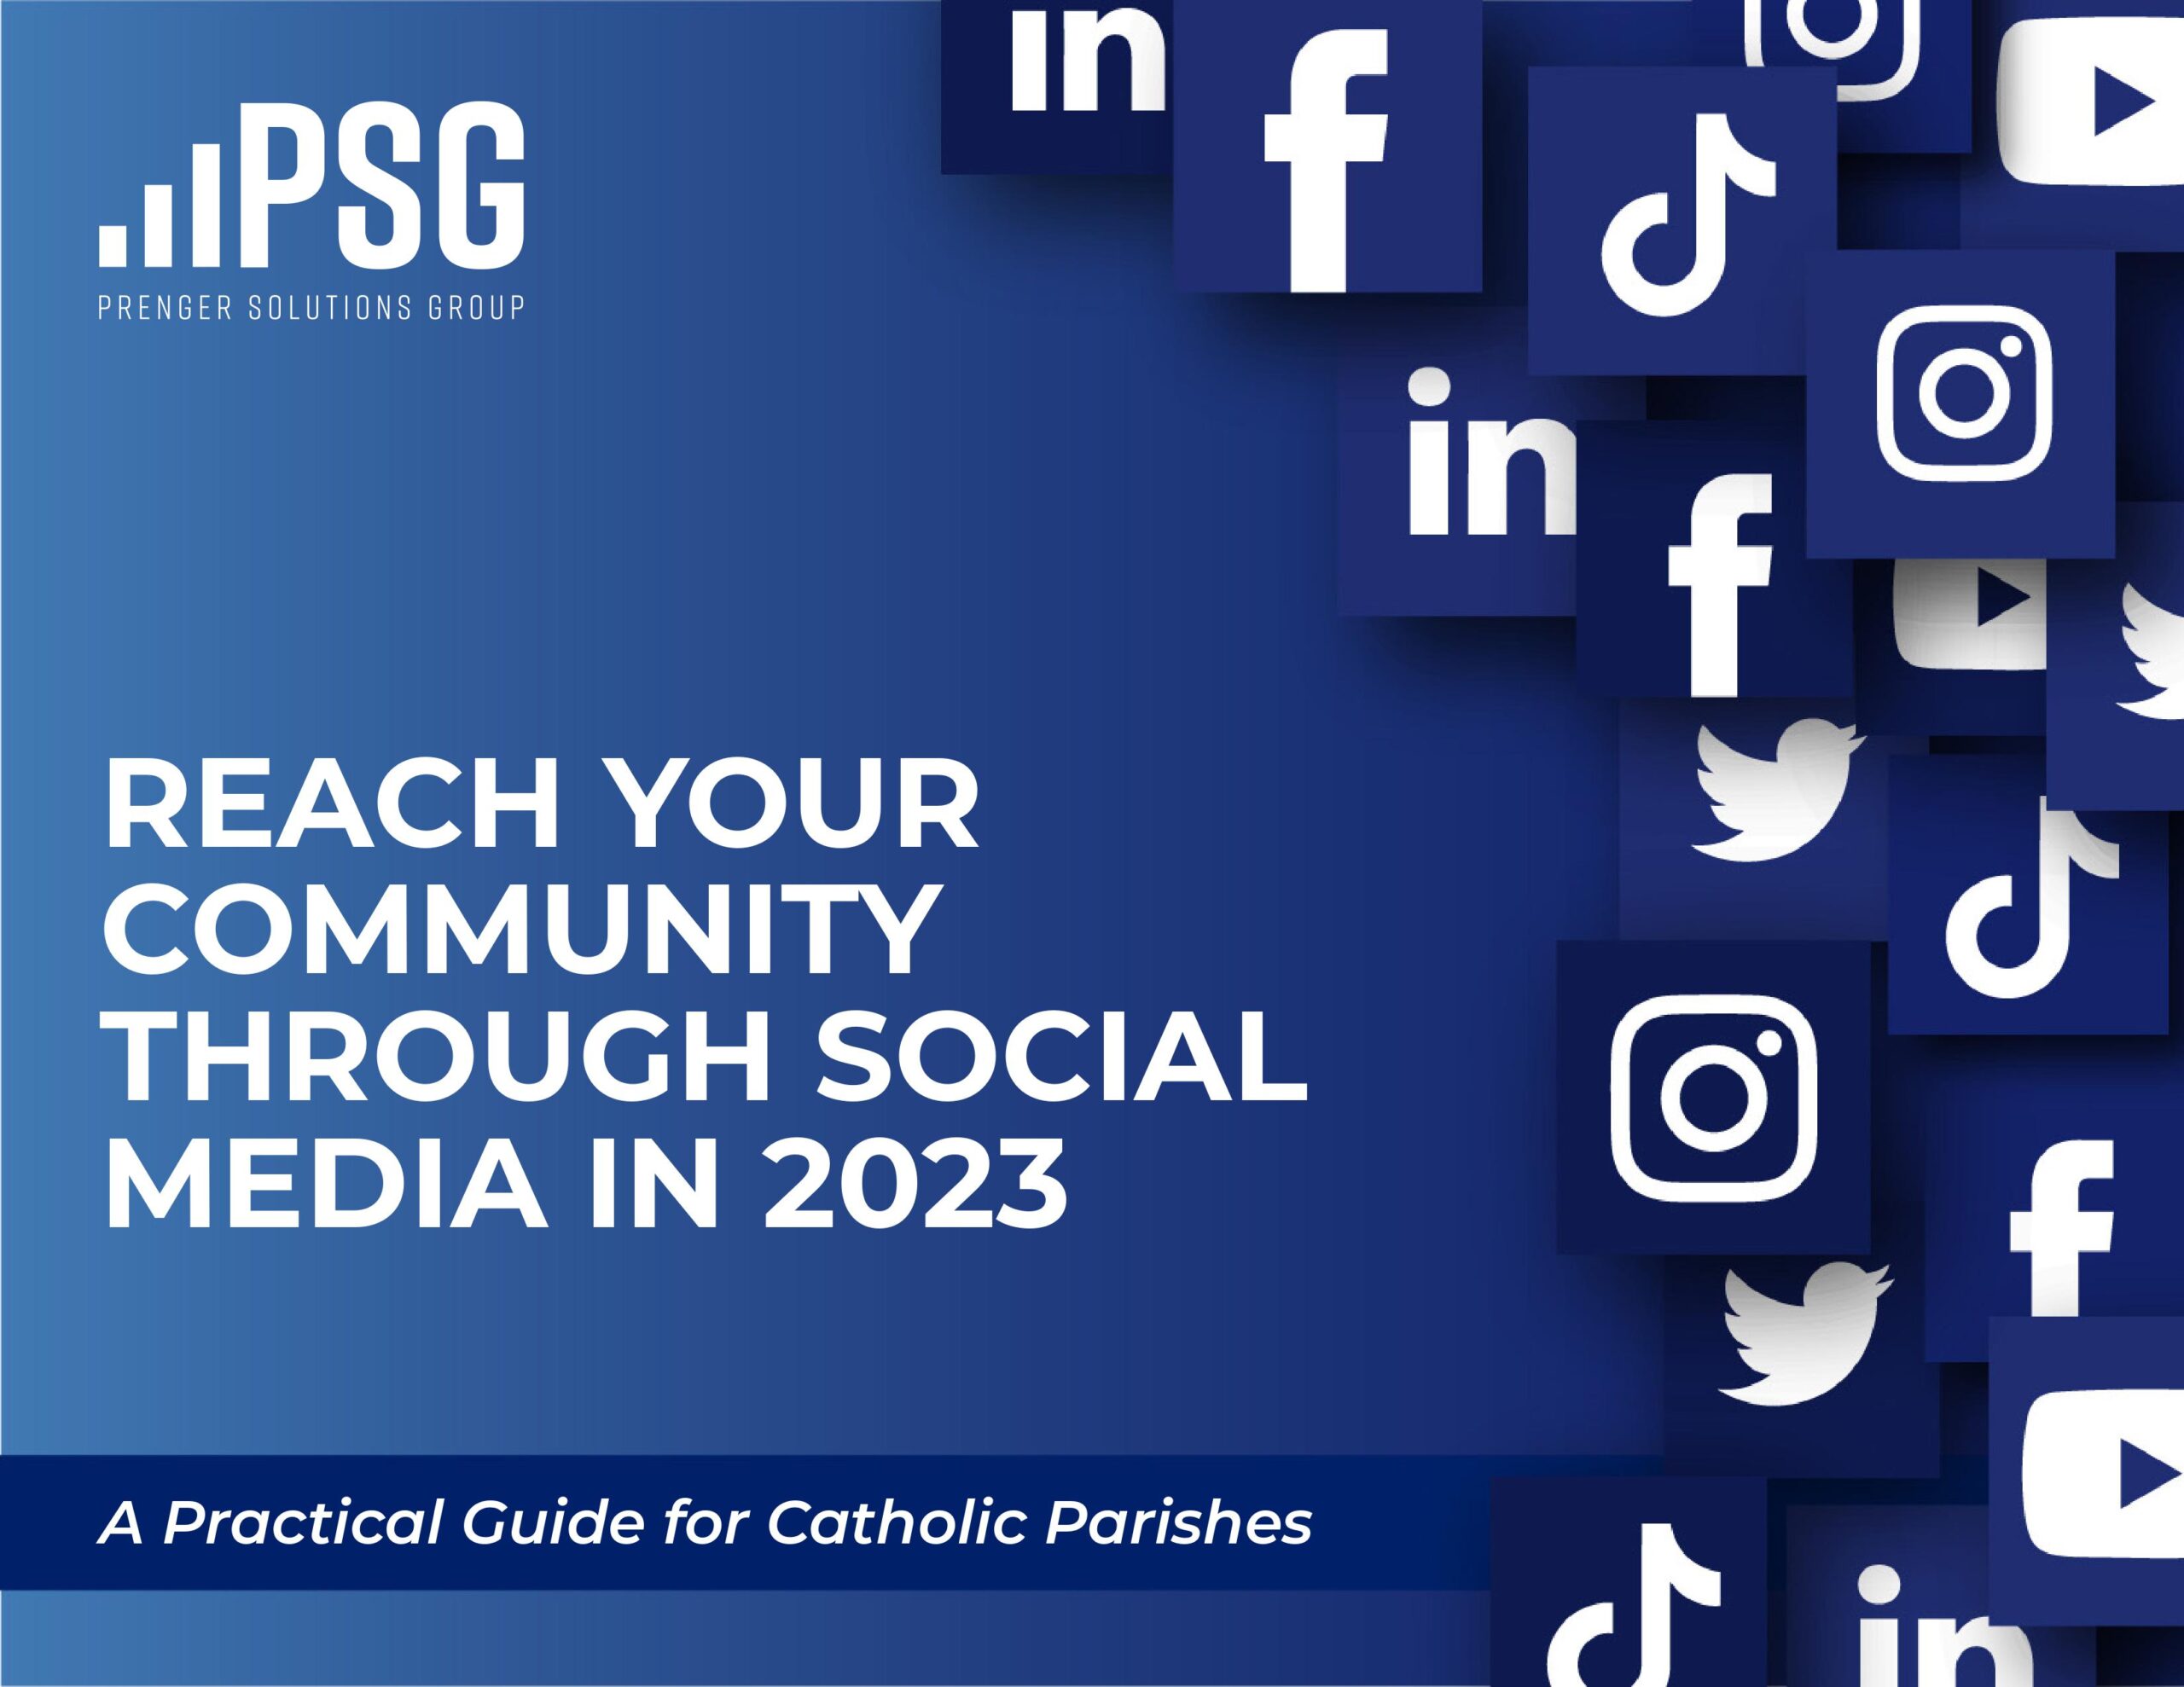 Parish Social Media Guide for 2023